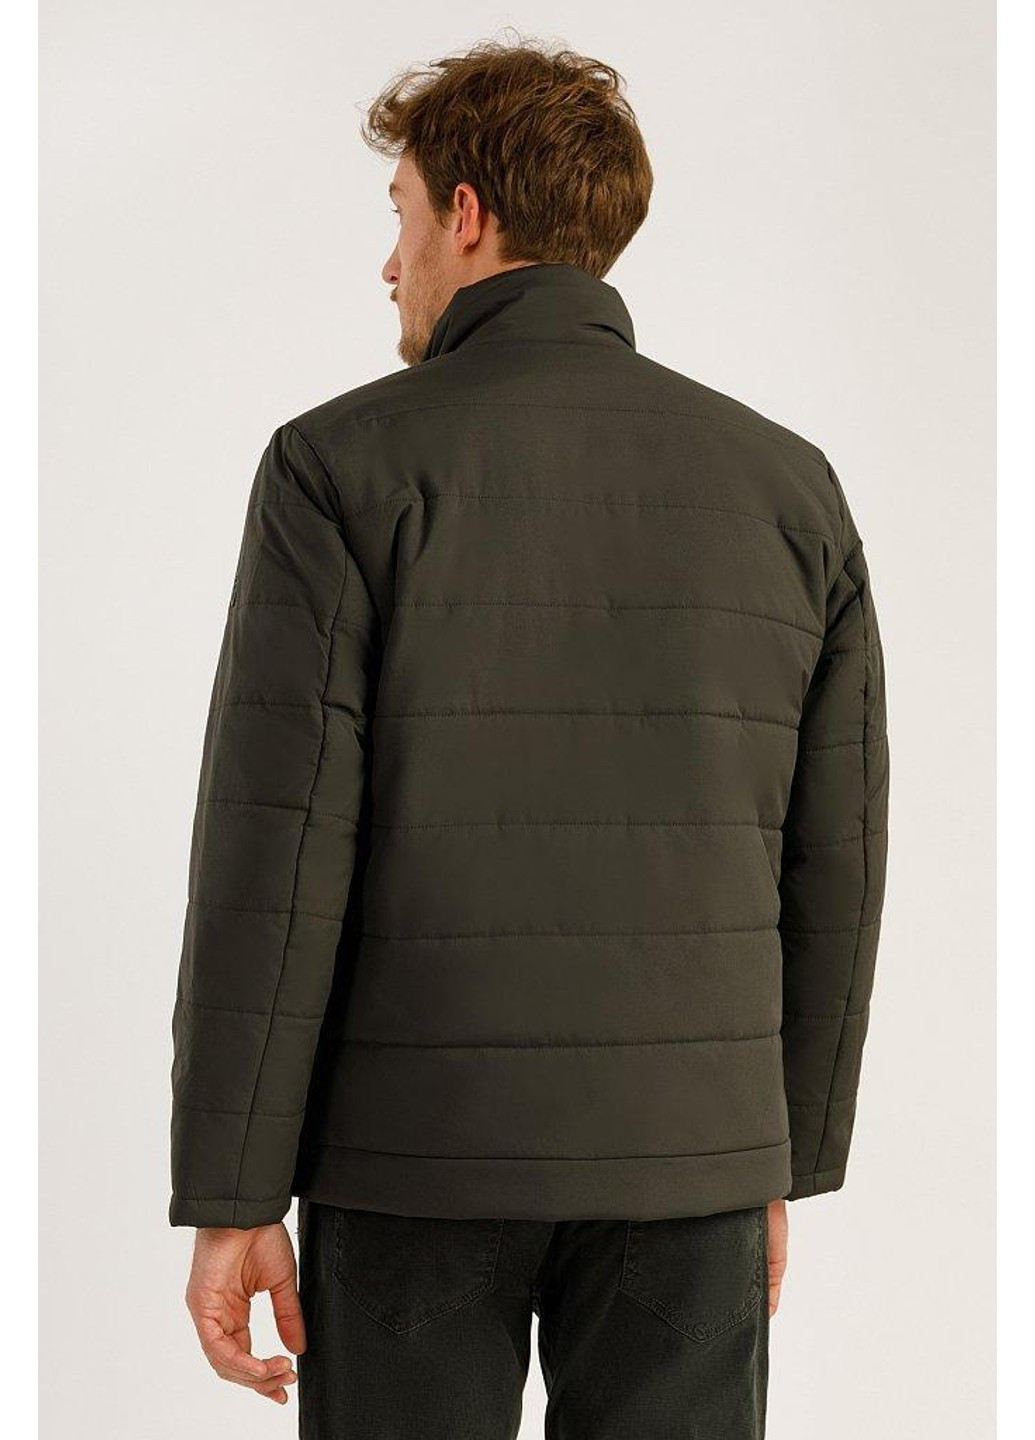 Зеленая демисезонная куртка a19-42014-202 Finn Flare